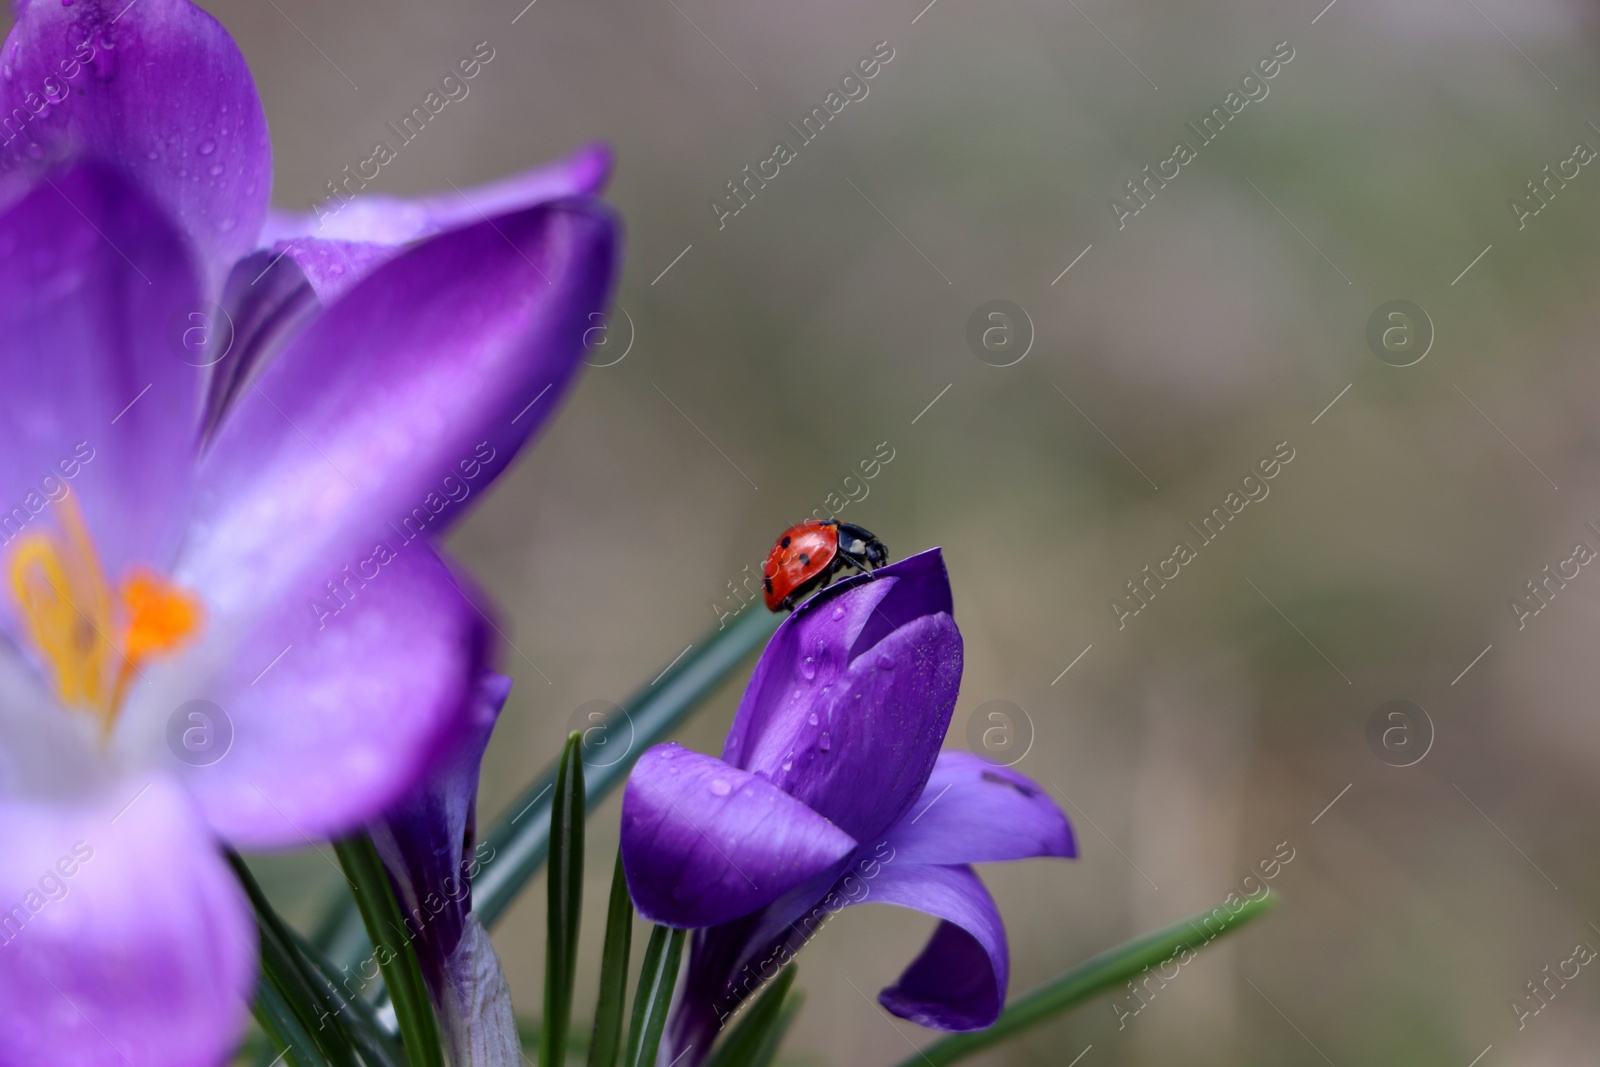 Photo of Ladybug on fresh purple crocus flower growing against blurred background, closeup